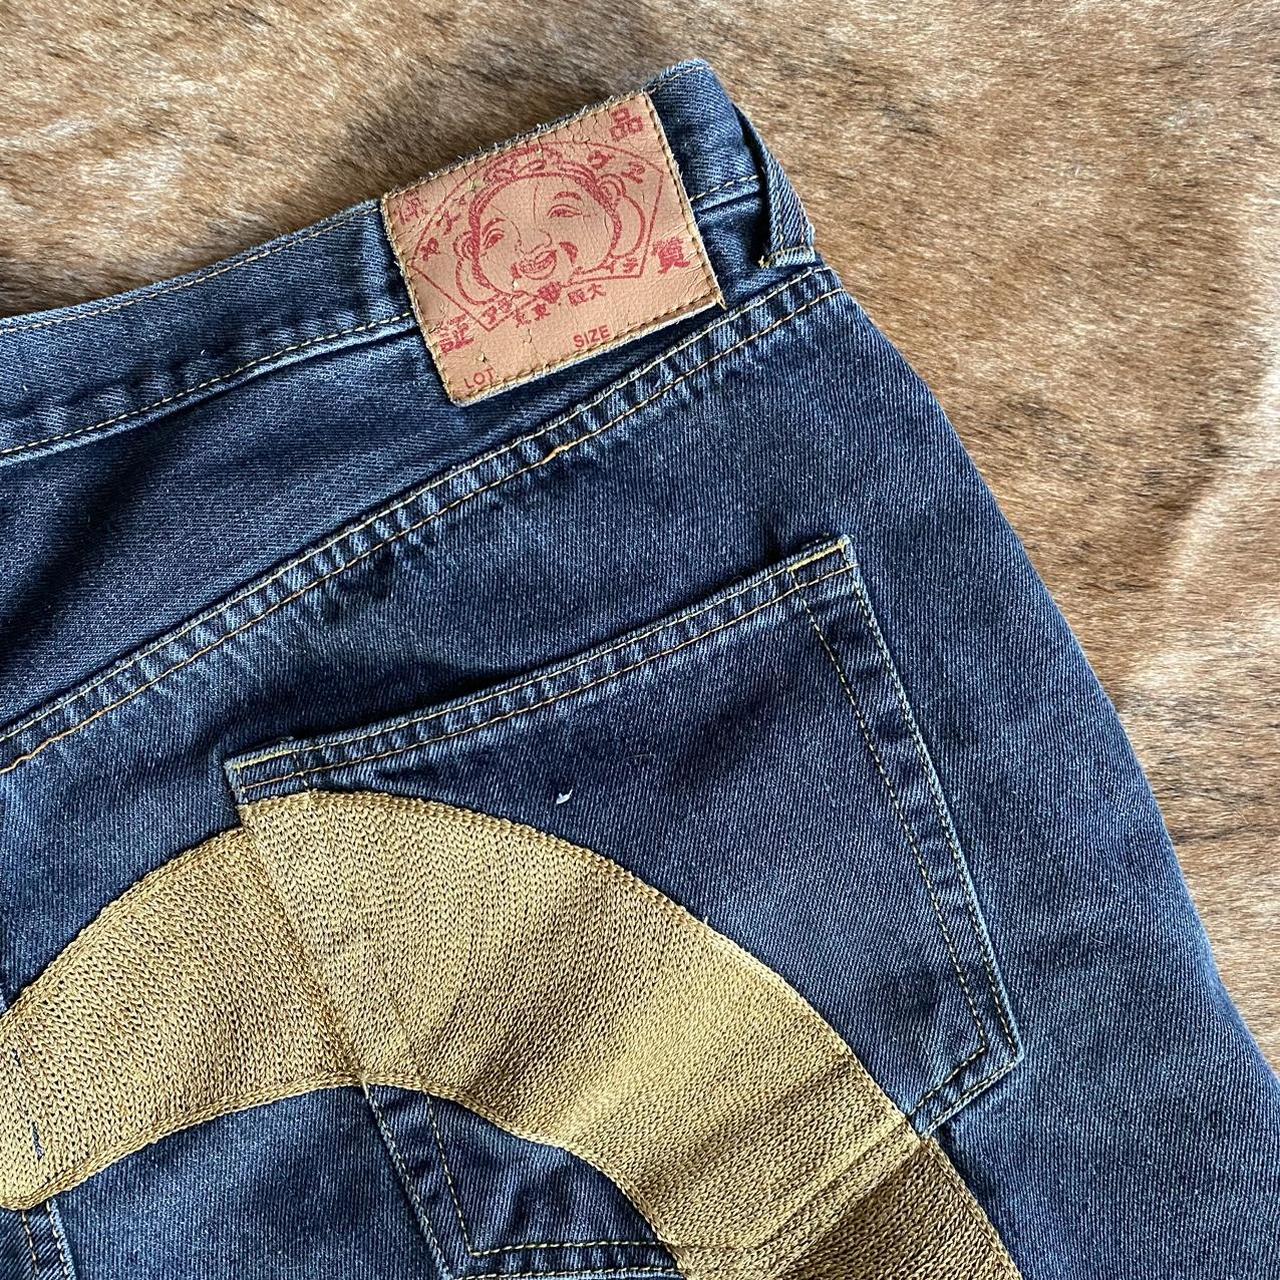 Evisu Jeans Embroidered Patch - Depop